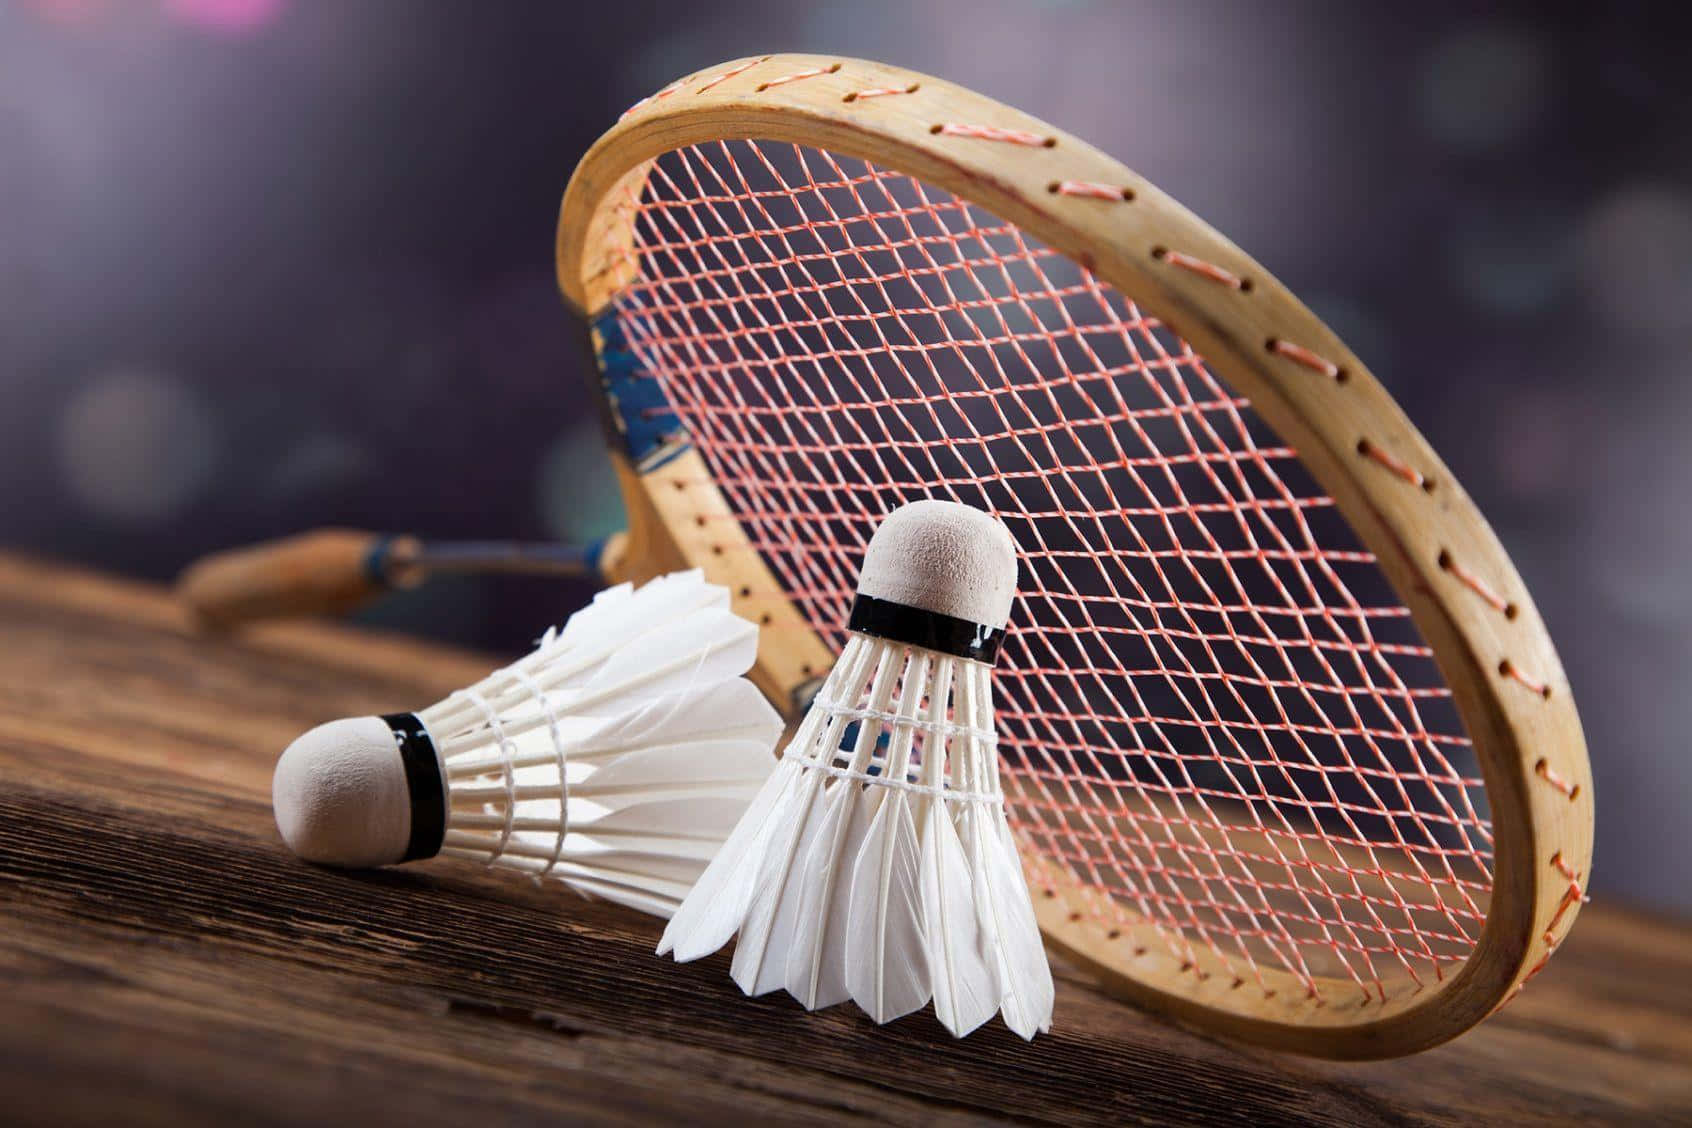 Enjoy The Game Of Badminton